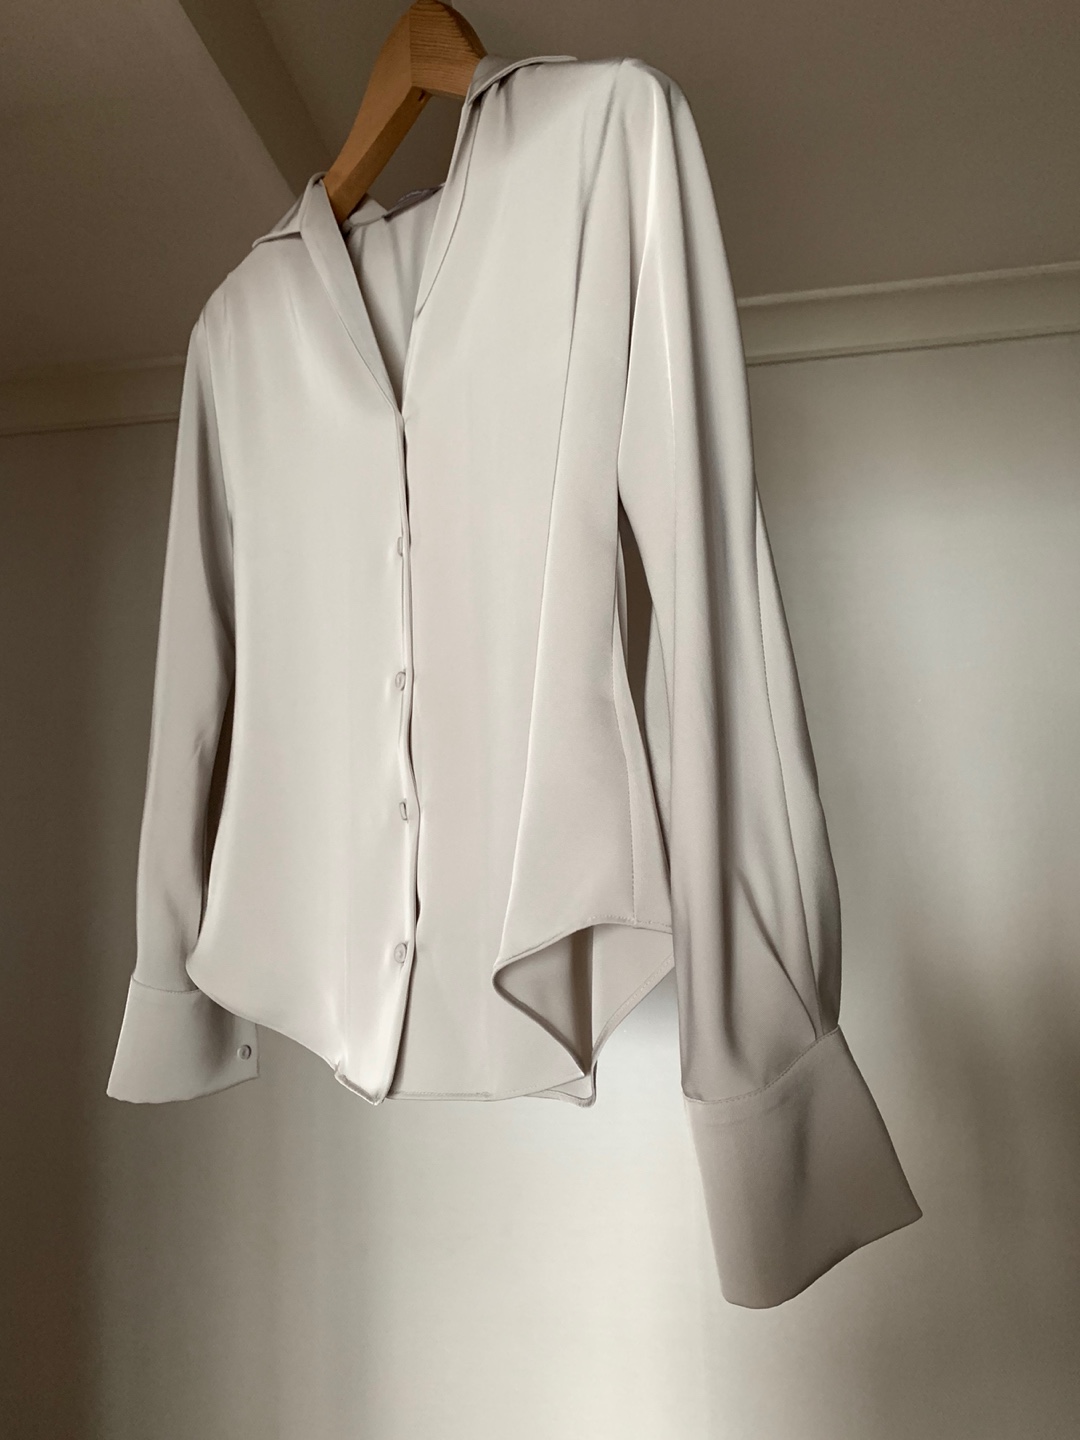 mild blouse-light grey(26일pm7마감)